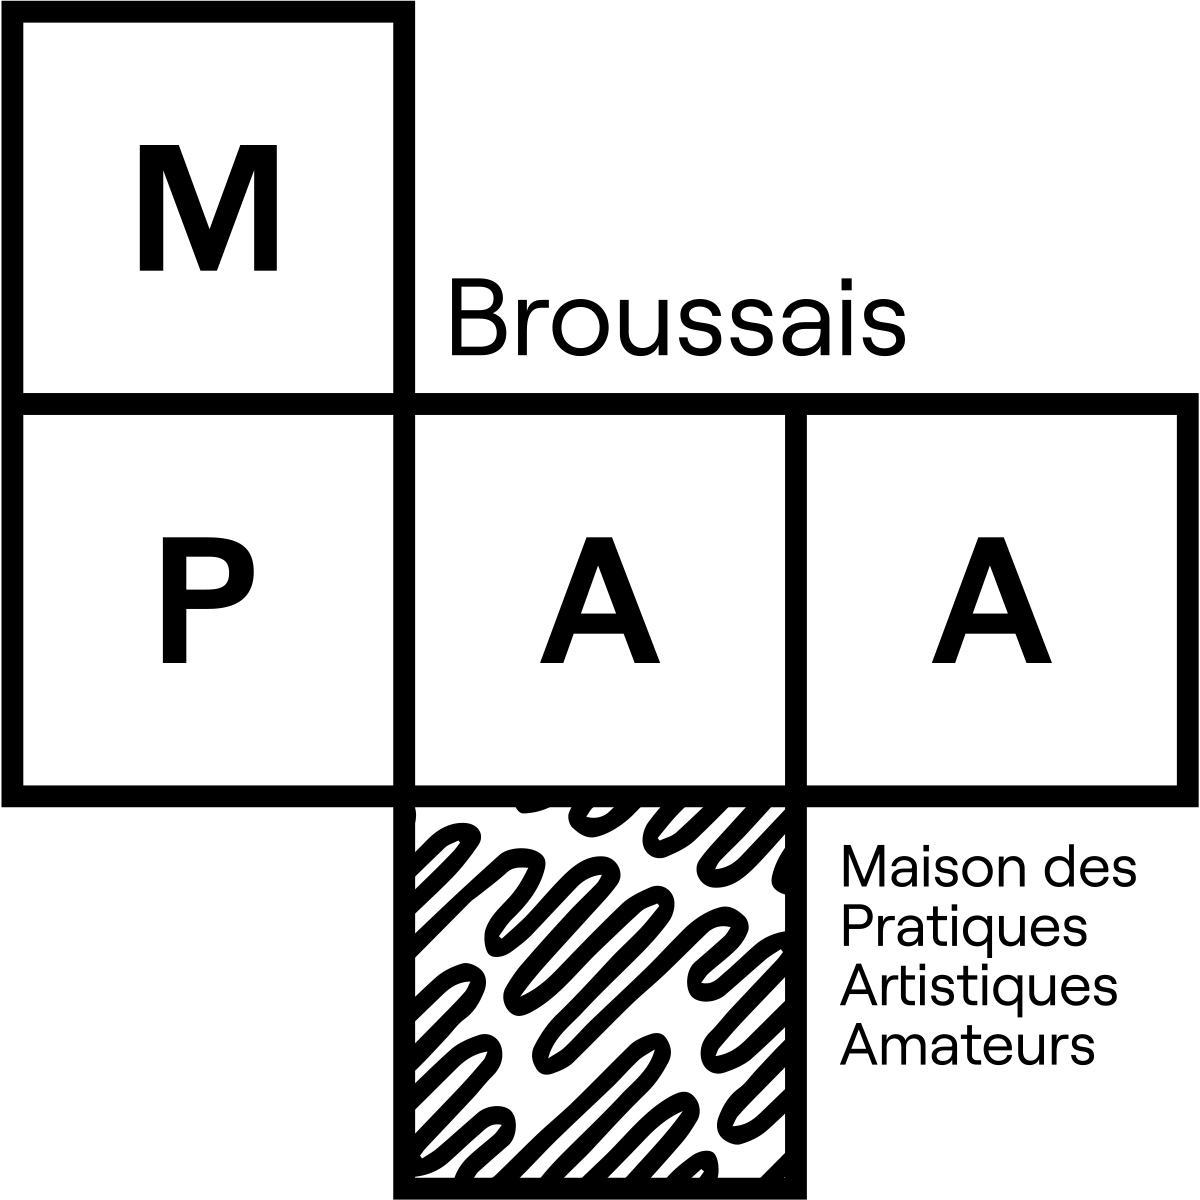 MPAA Broussais